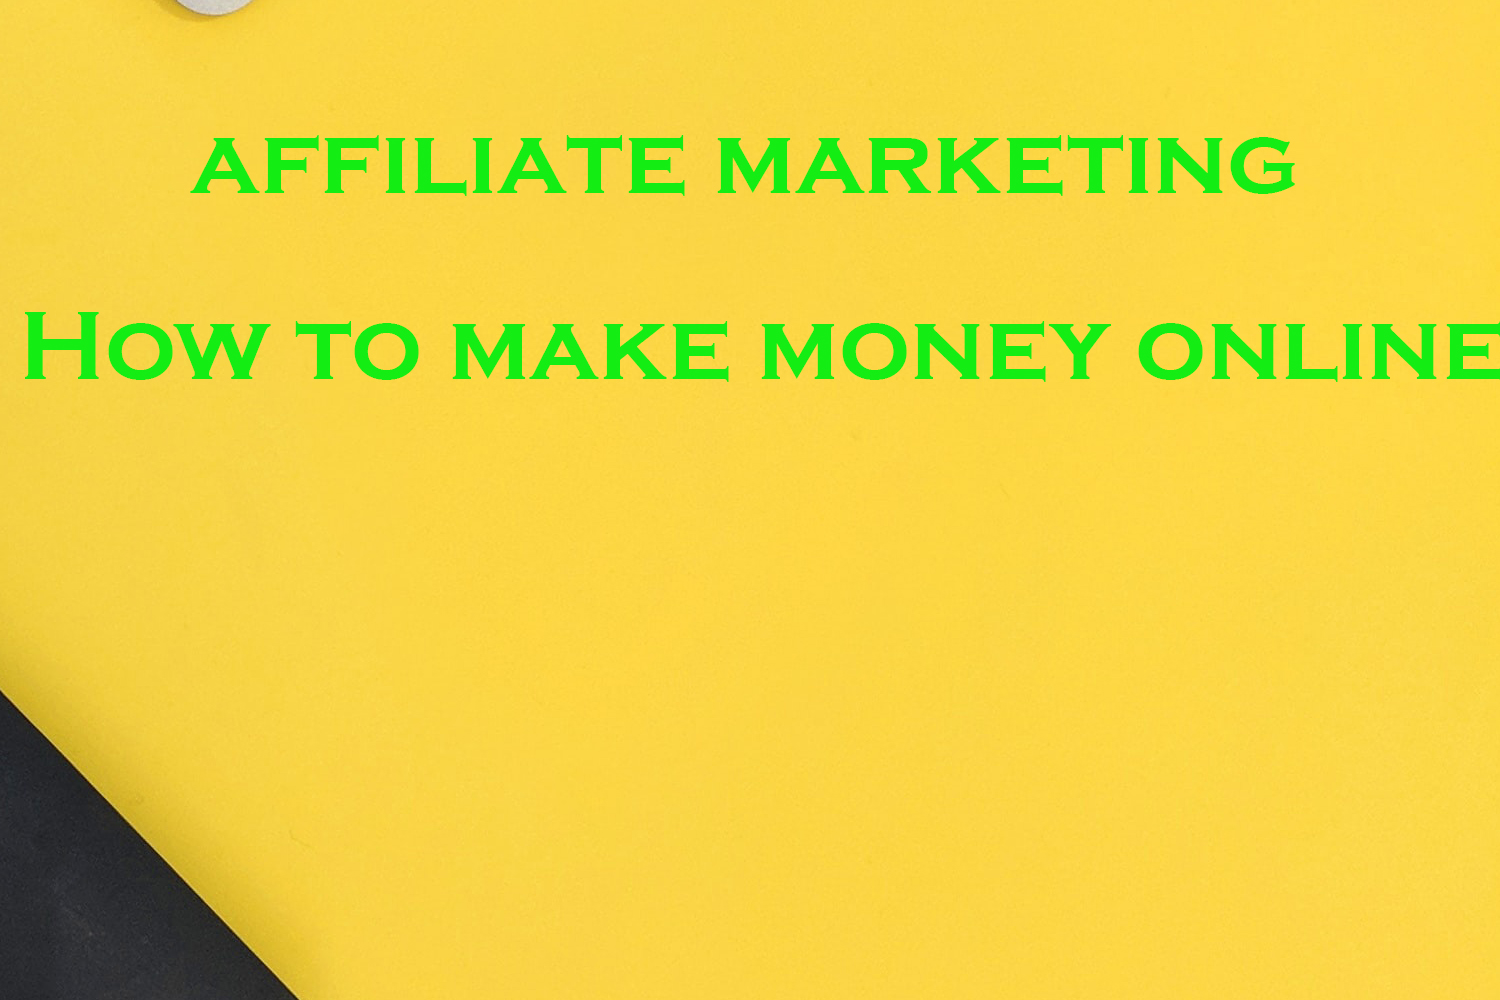 How to make money online through affiliate marketing